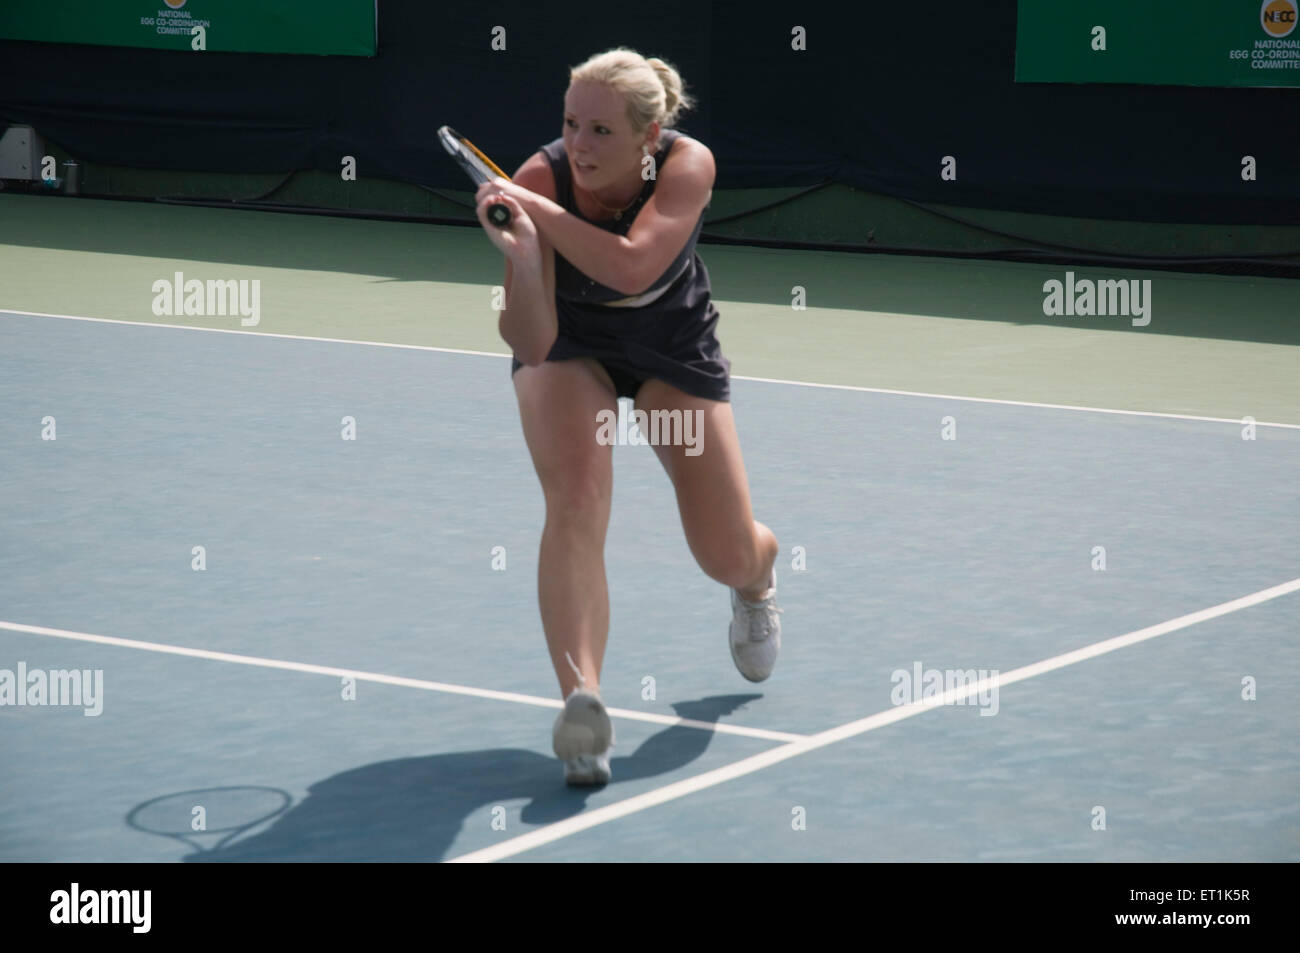 woman playing tennis Stock Photo